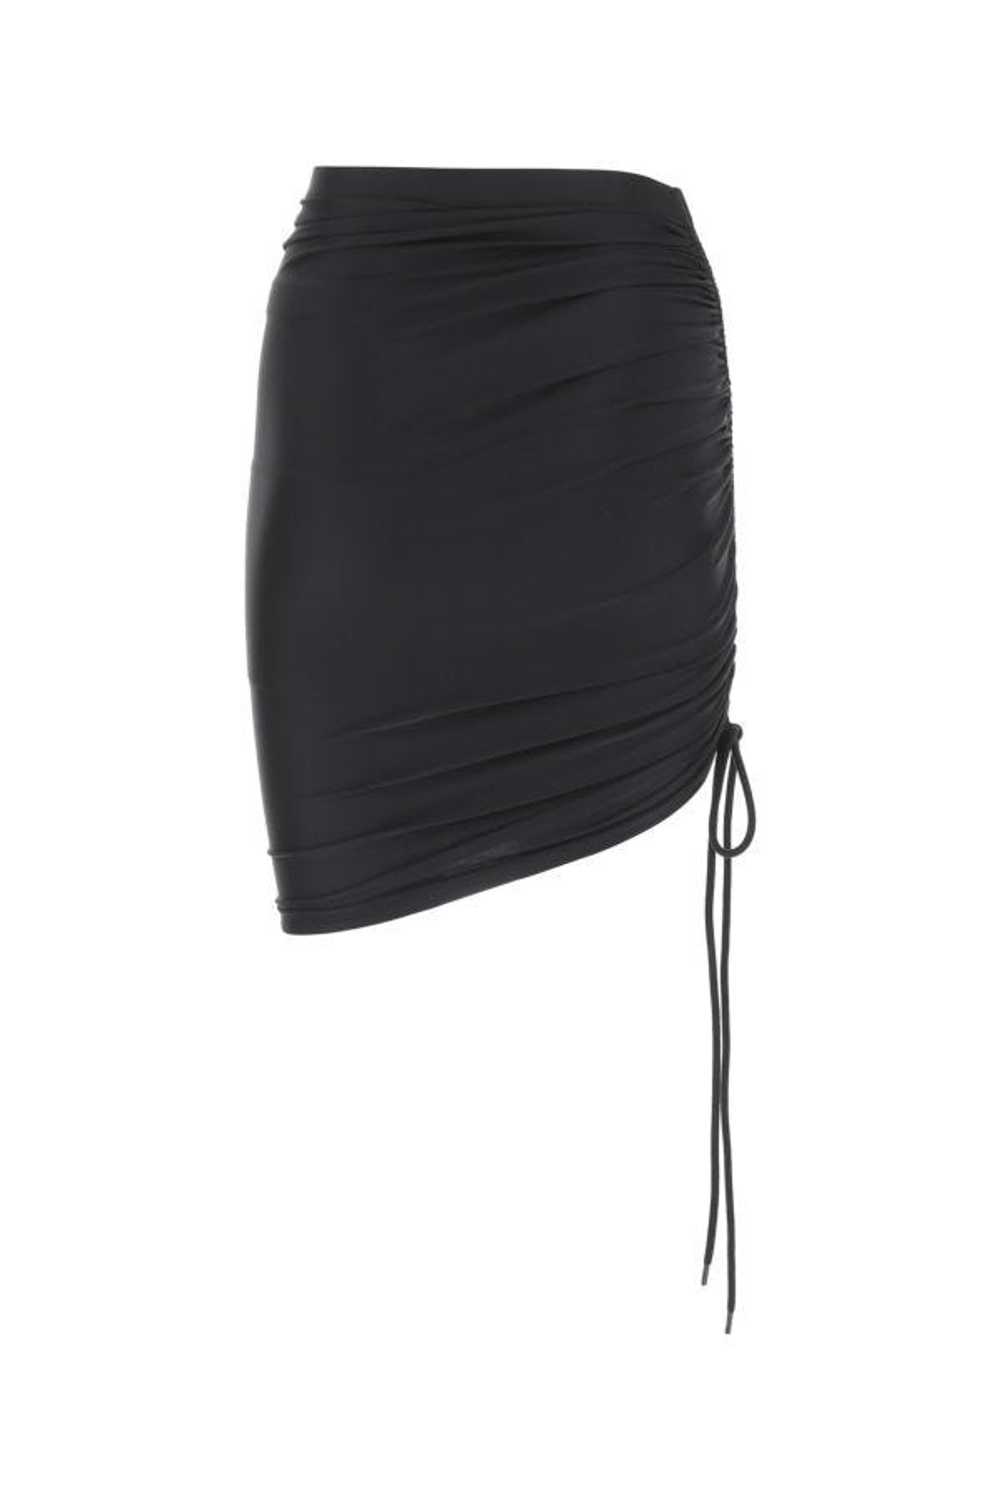 Balenciaga Woman Black Stretch Nylon Skirt - image 2